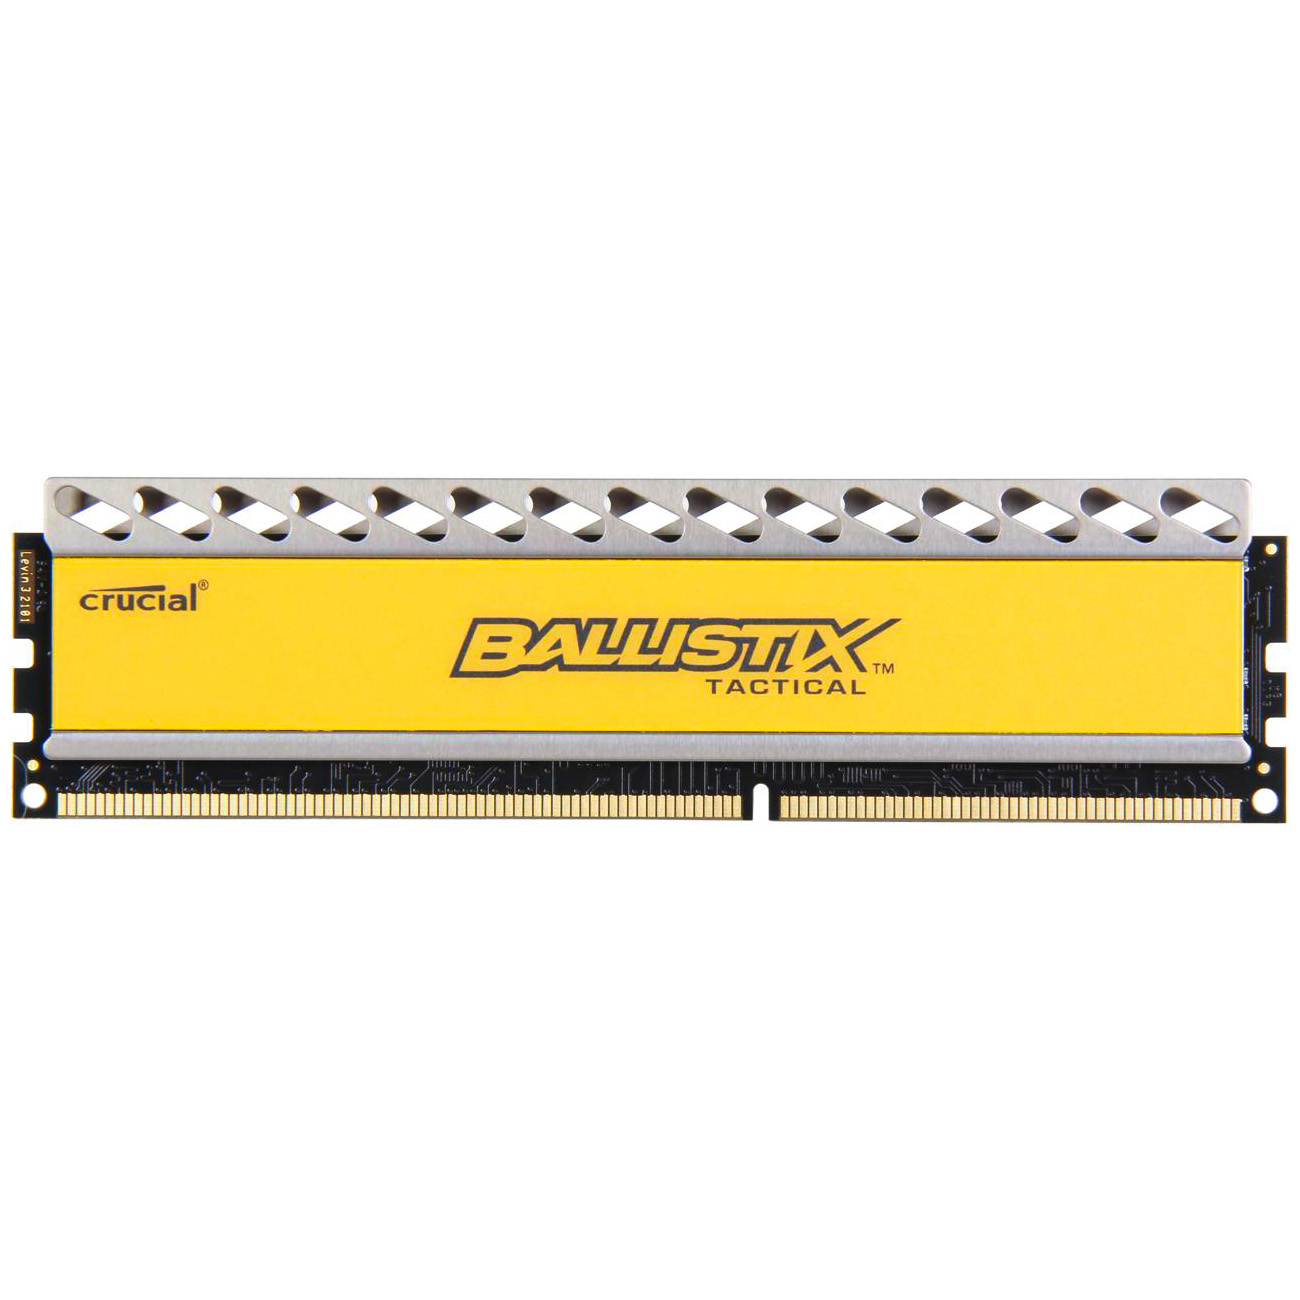 رم دسکتاپ DDR3 تک کاناله 1600 مگاهرتز CL8 کروشیال مدل Ballistix Tactical ظرفیت 8 گیگابایت